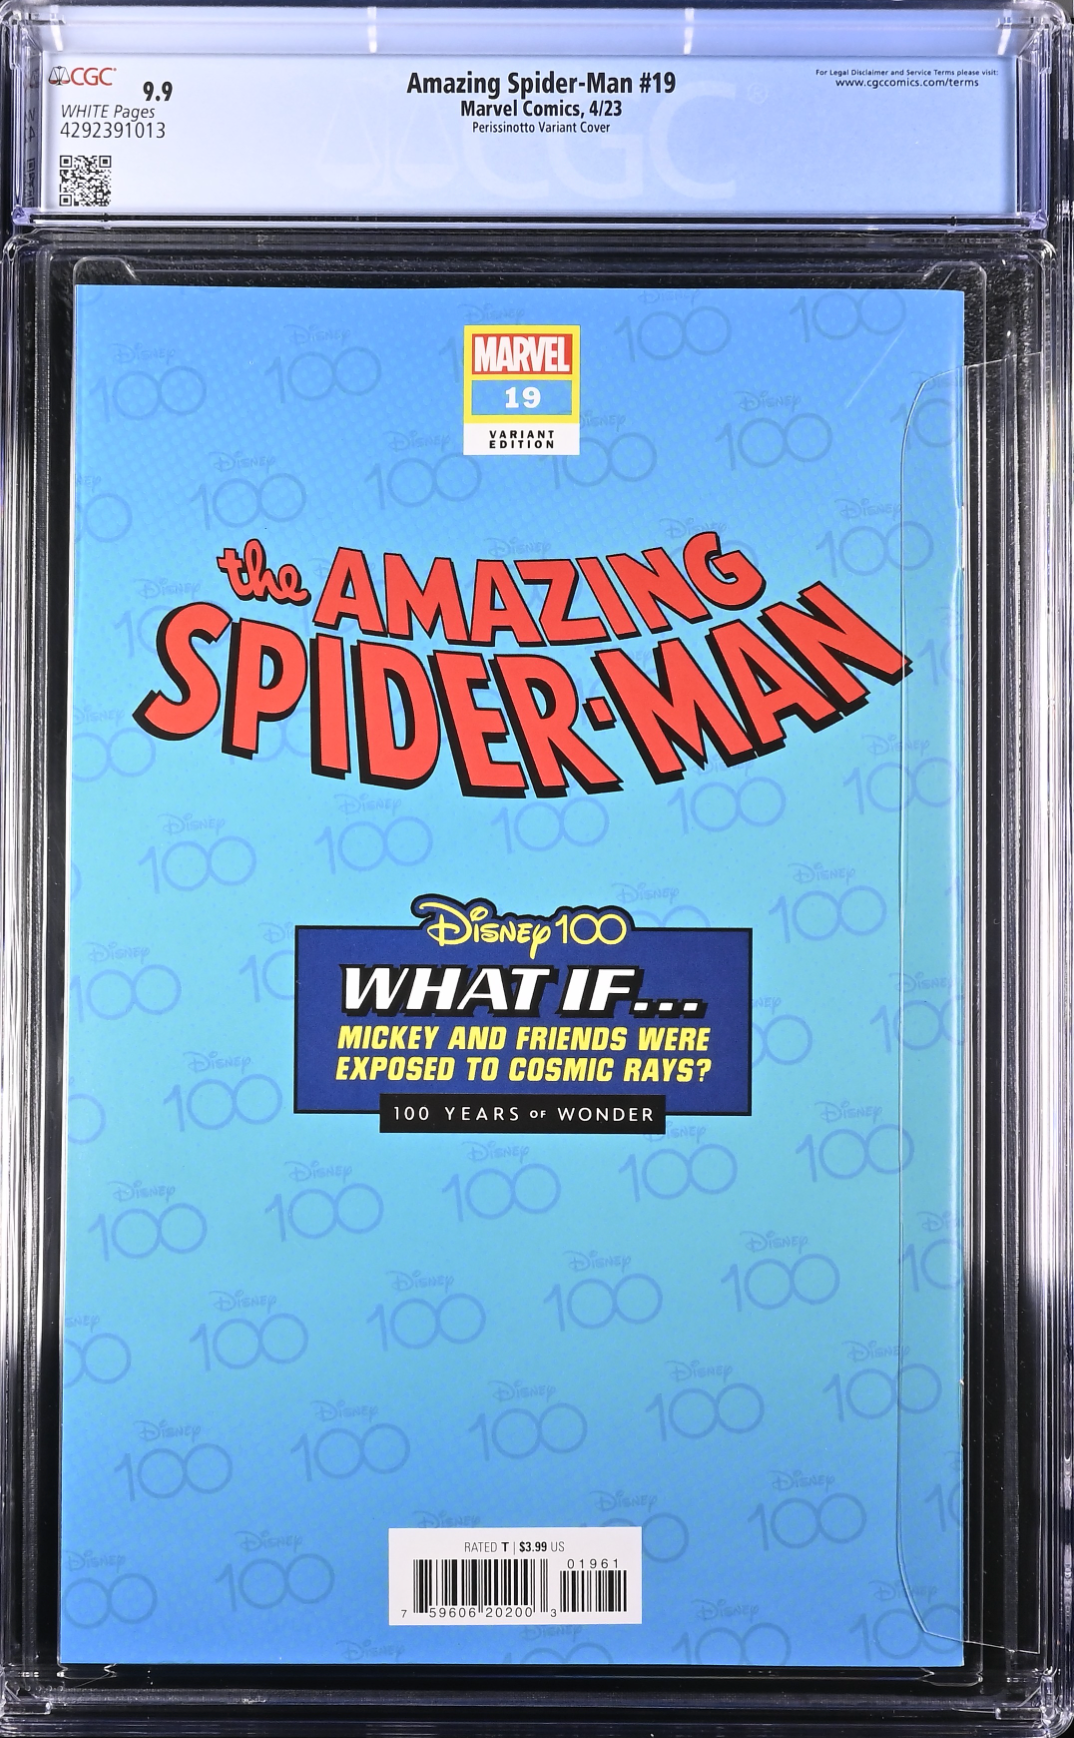 Amazing Spider-Man #19 Disney 100 Variant CGC 9.9